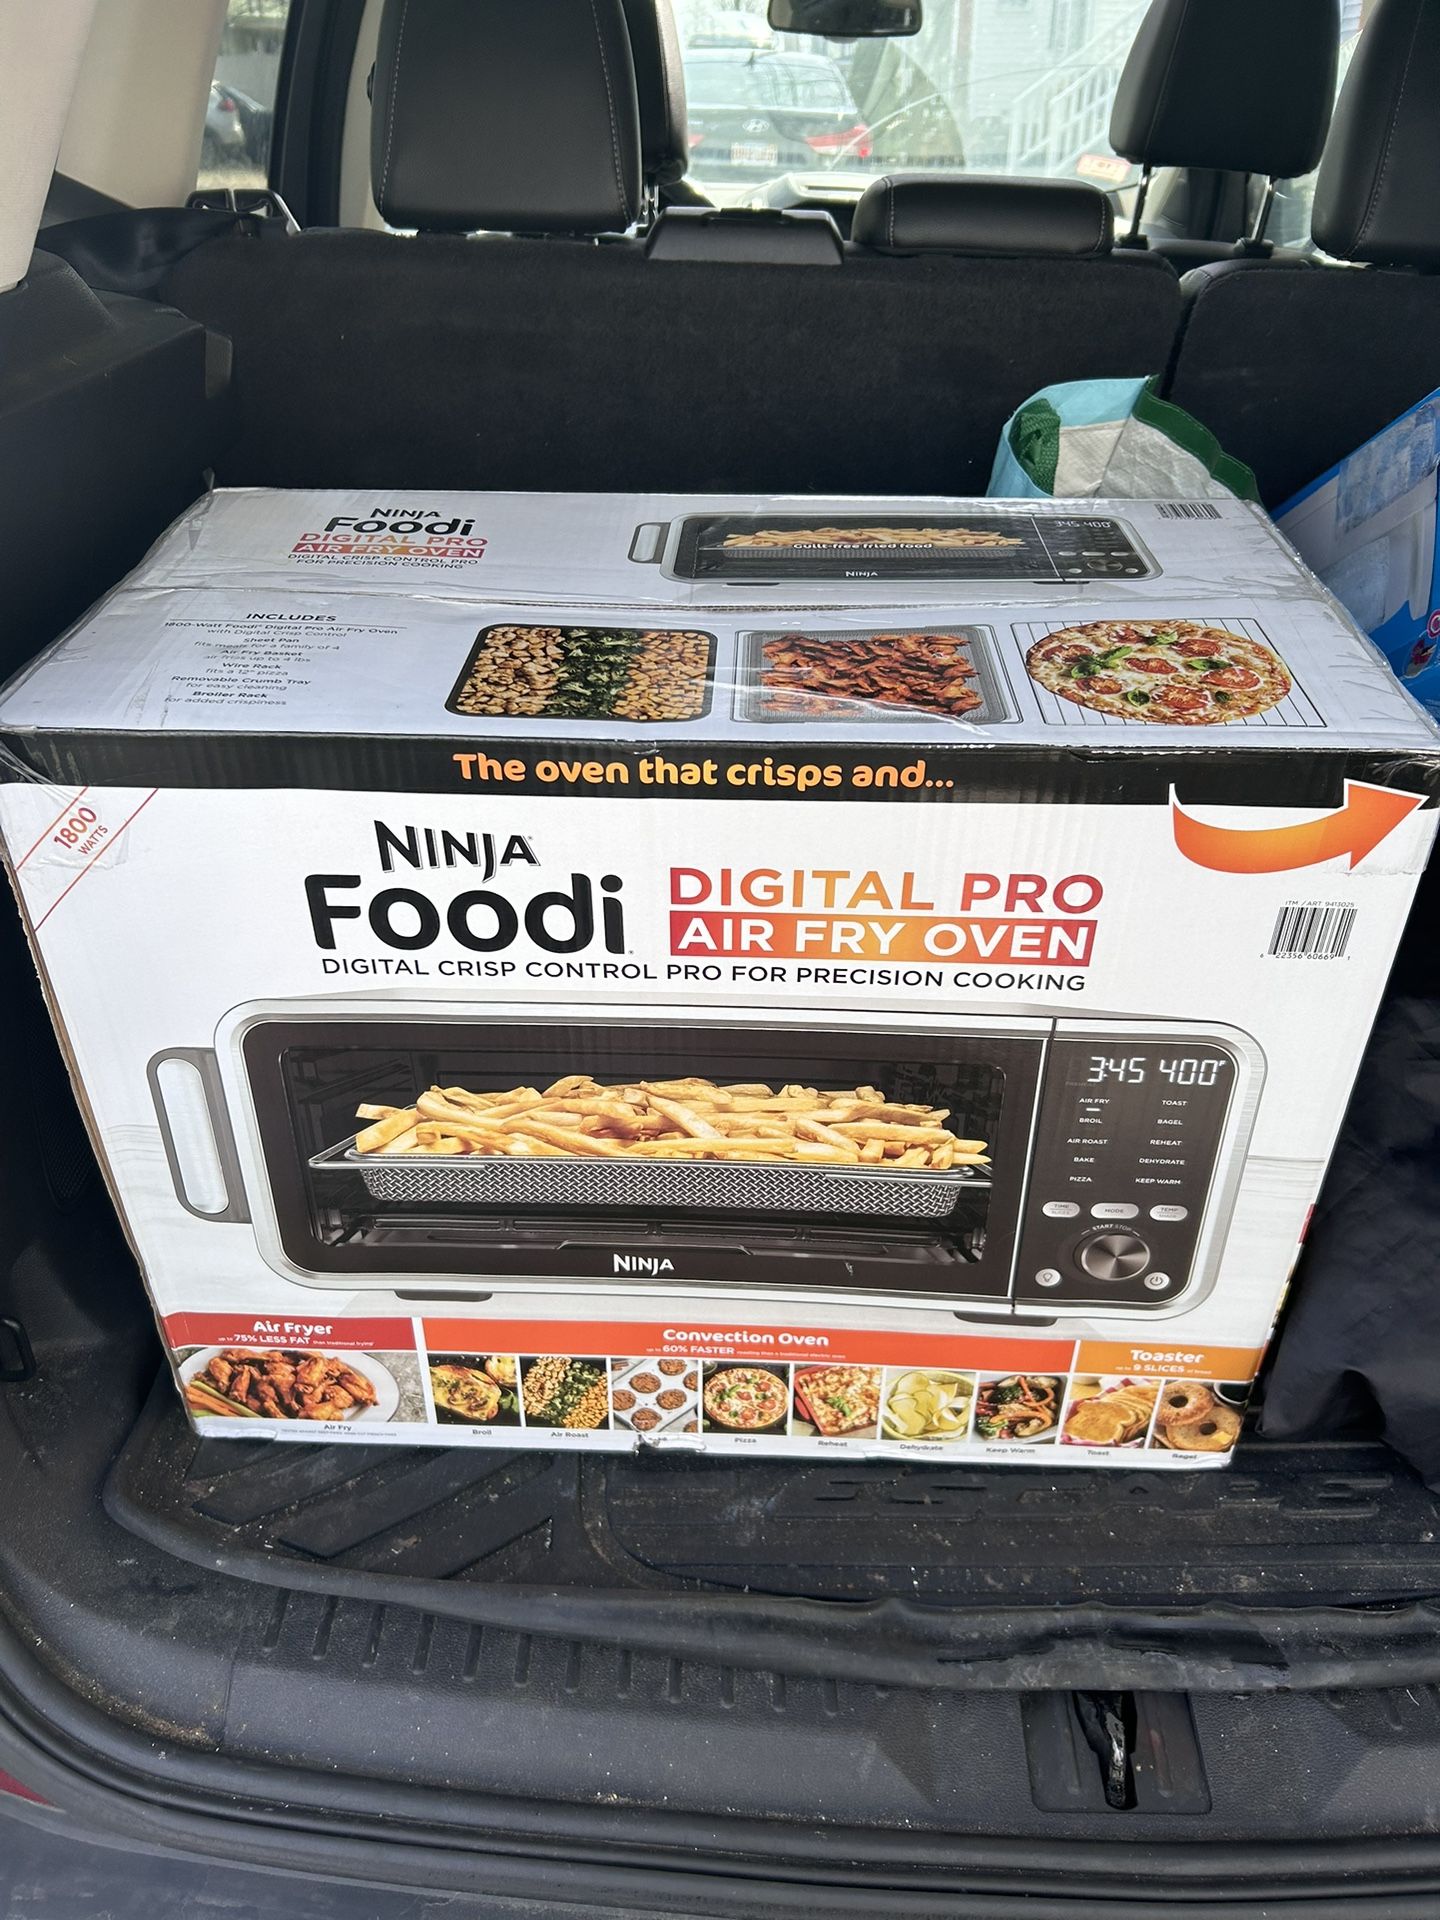 Foodi Ninja Digital Pro Air fry Oven 